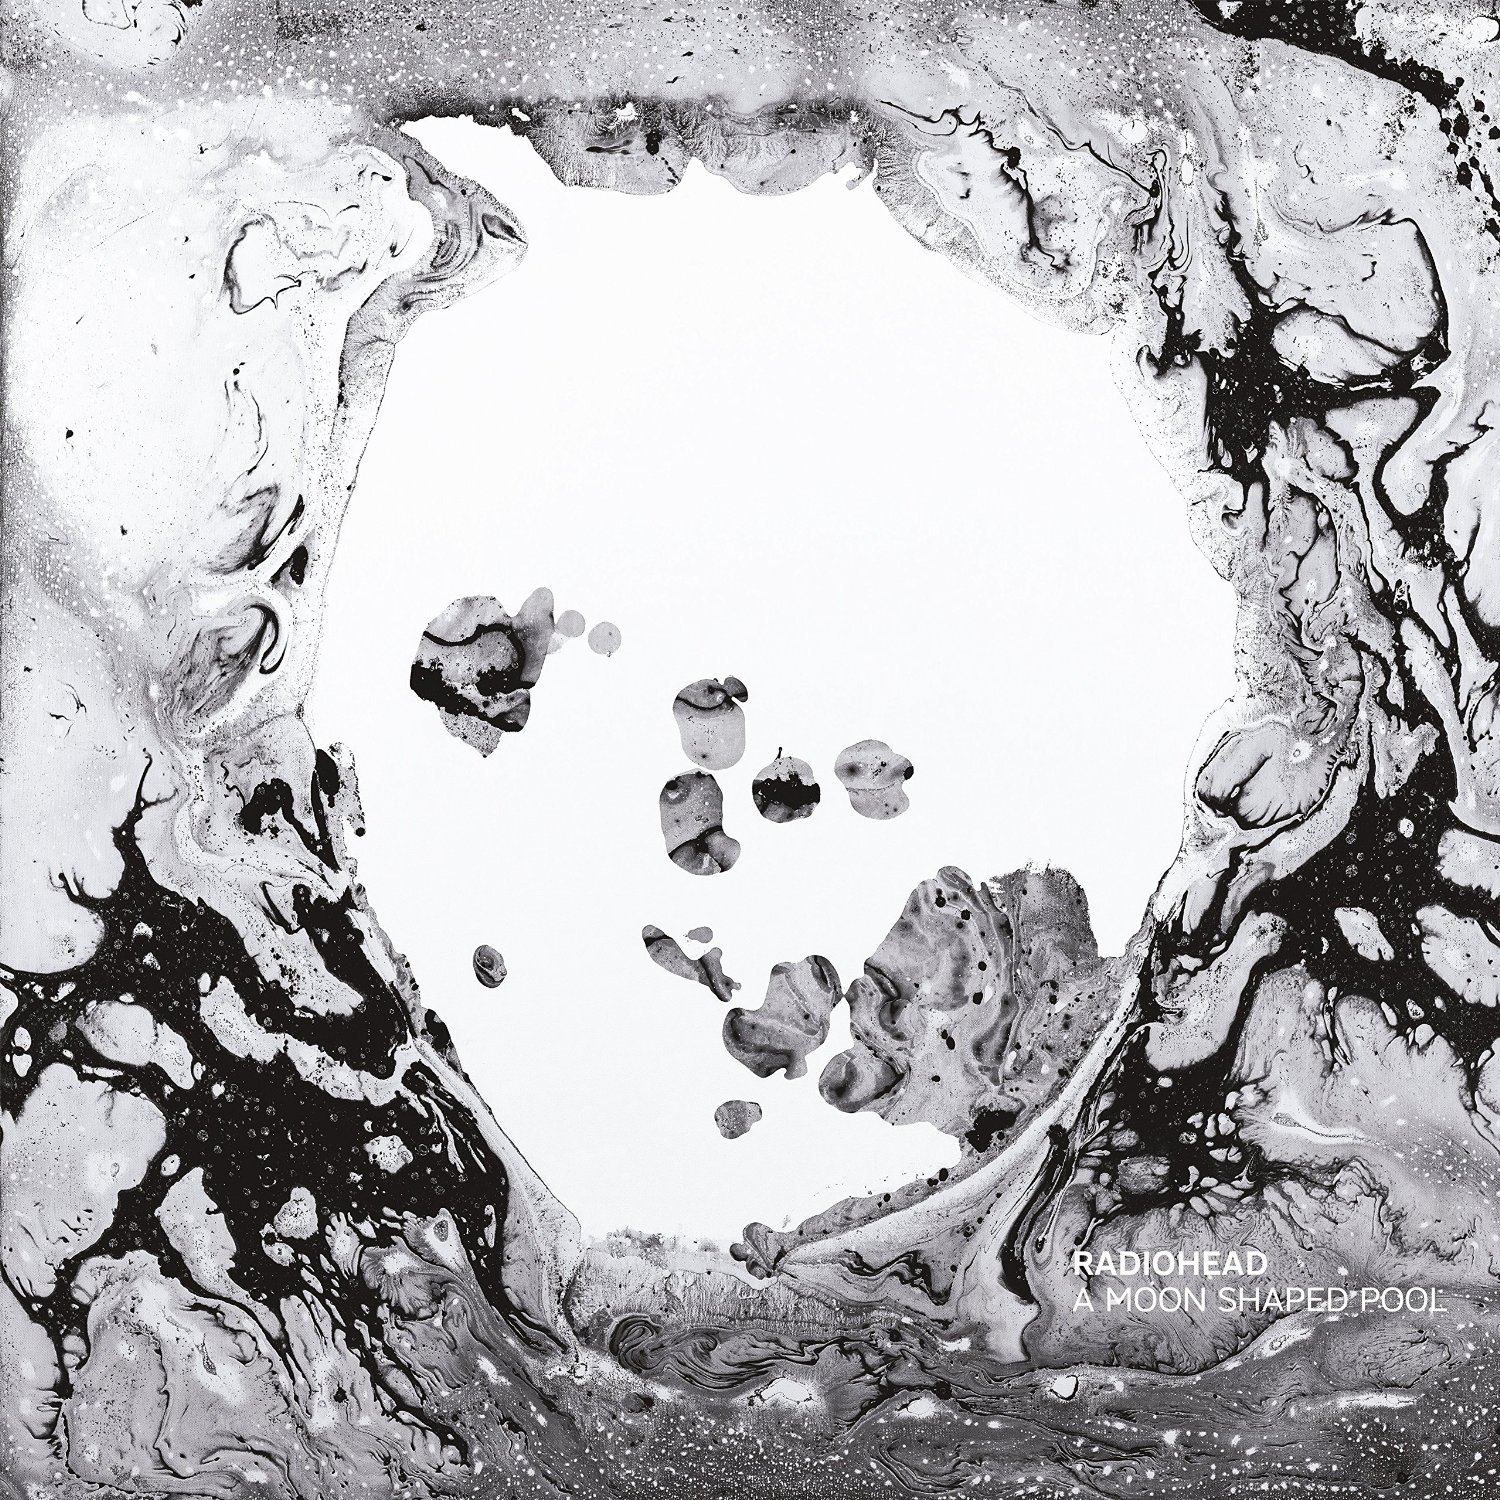 A Moon Shaped Pool | Radiohead